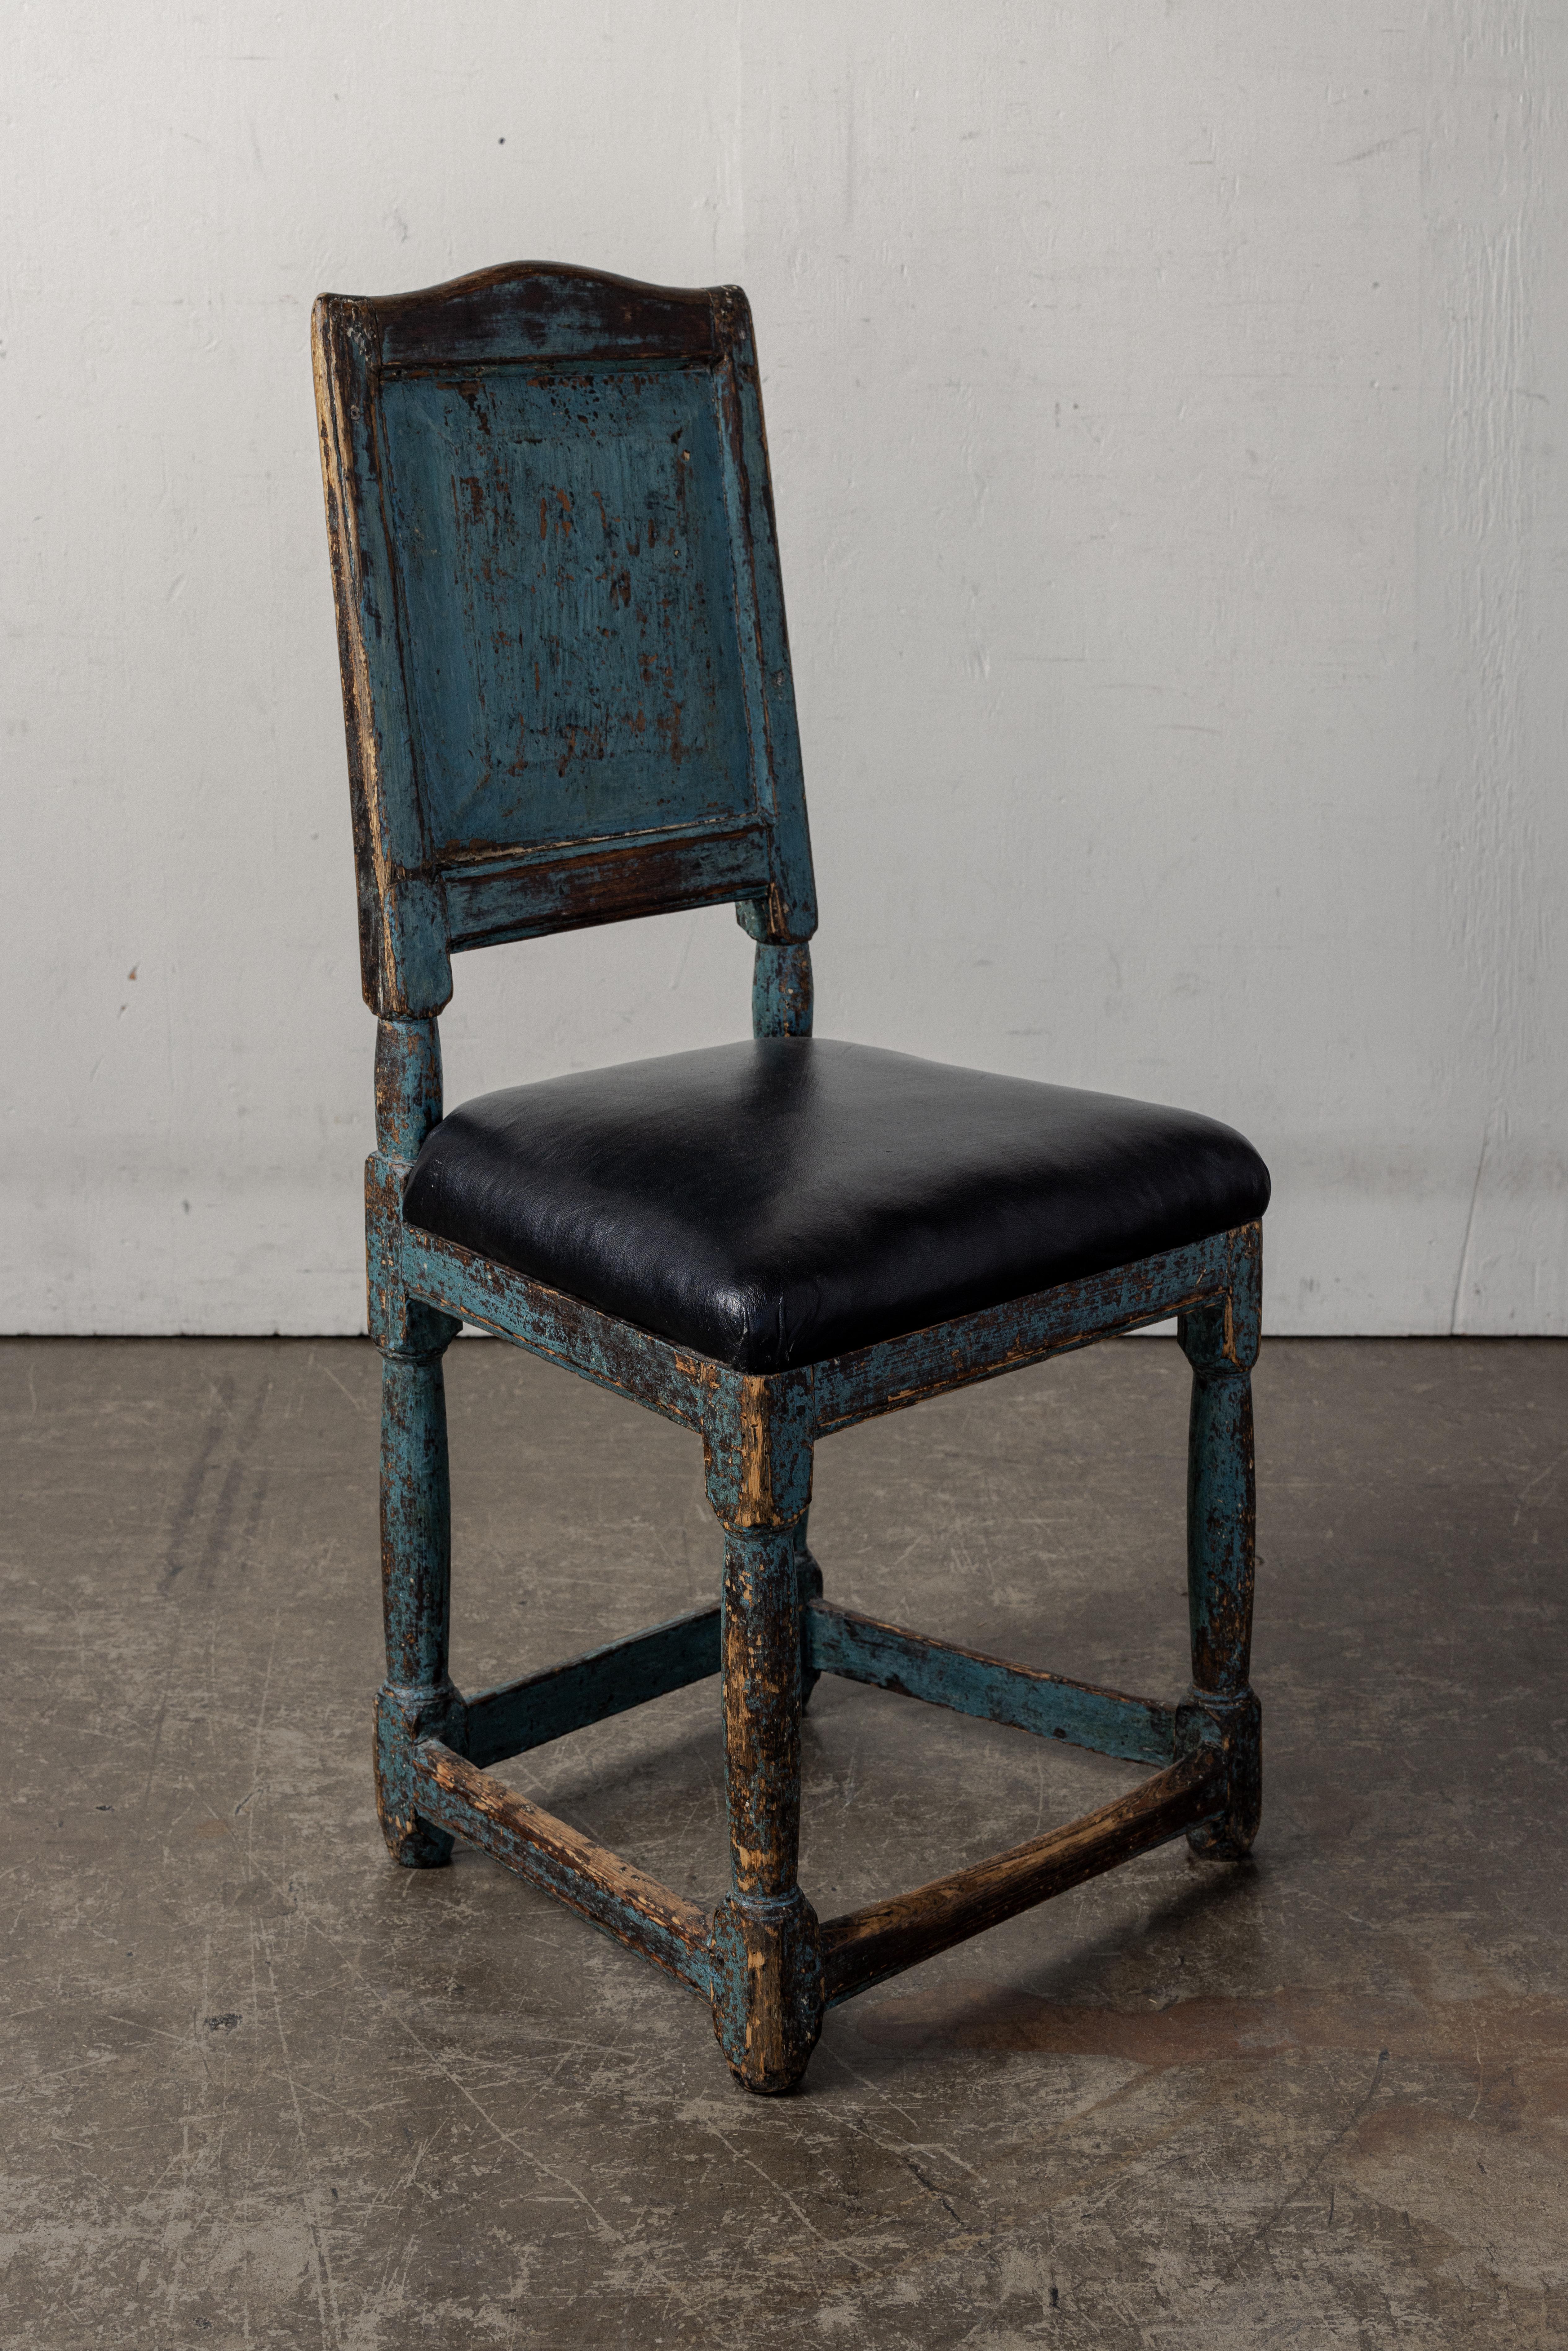 Allmoge Side Chair, c. 1800, Sweden

H 32.25